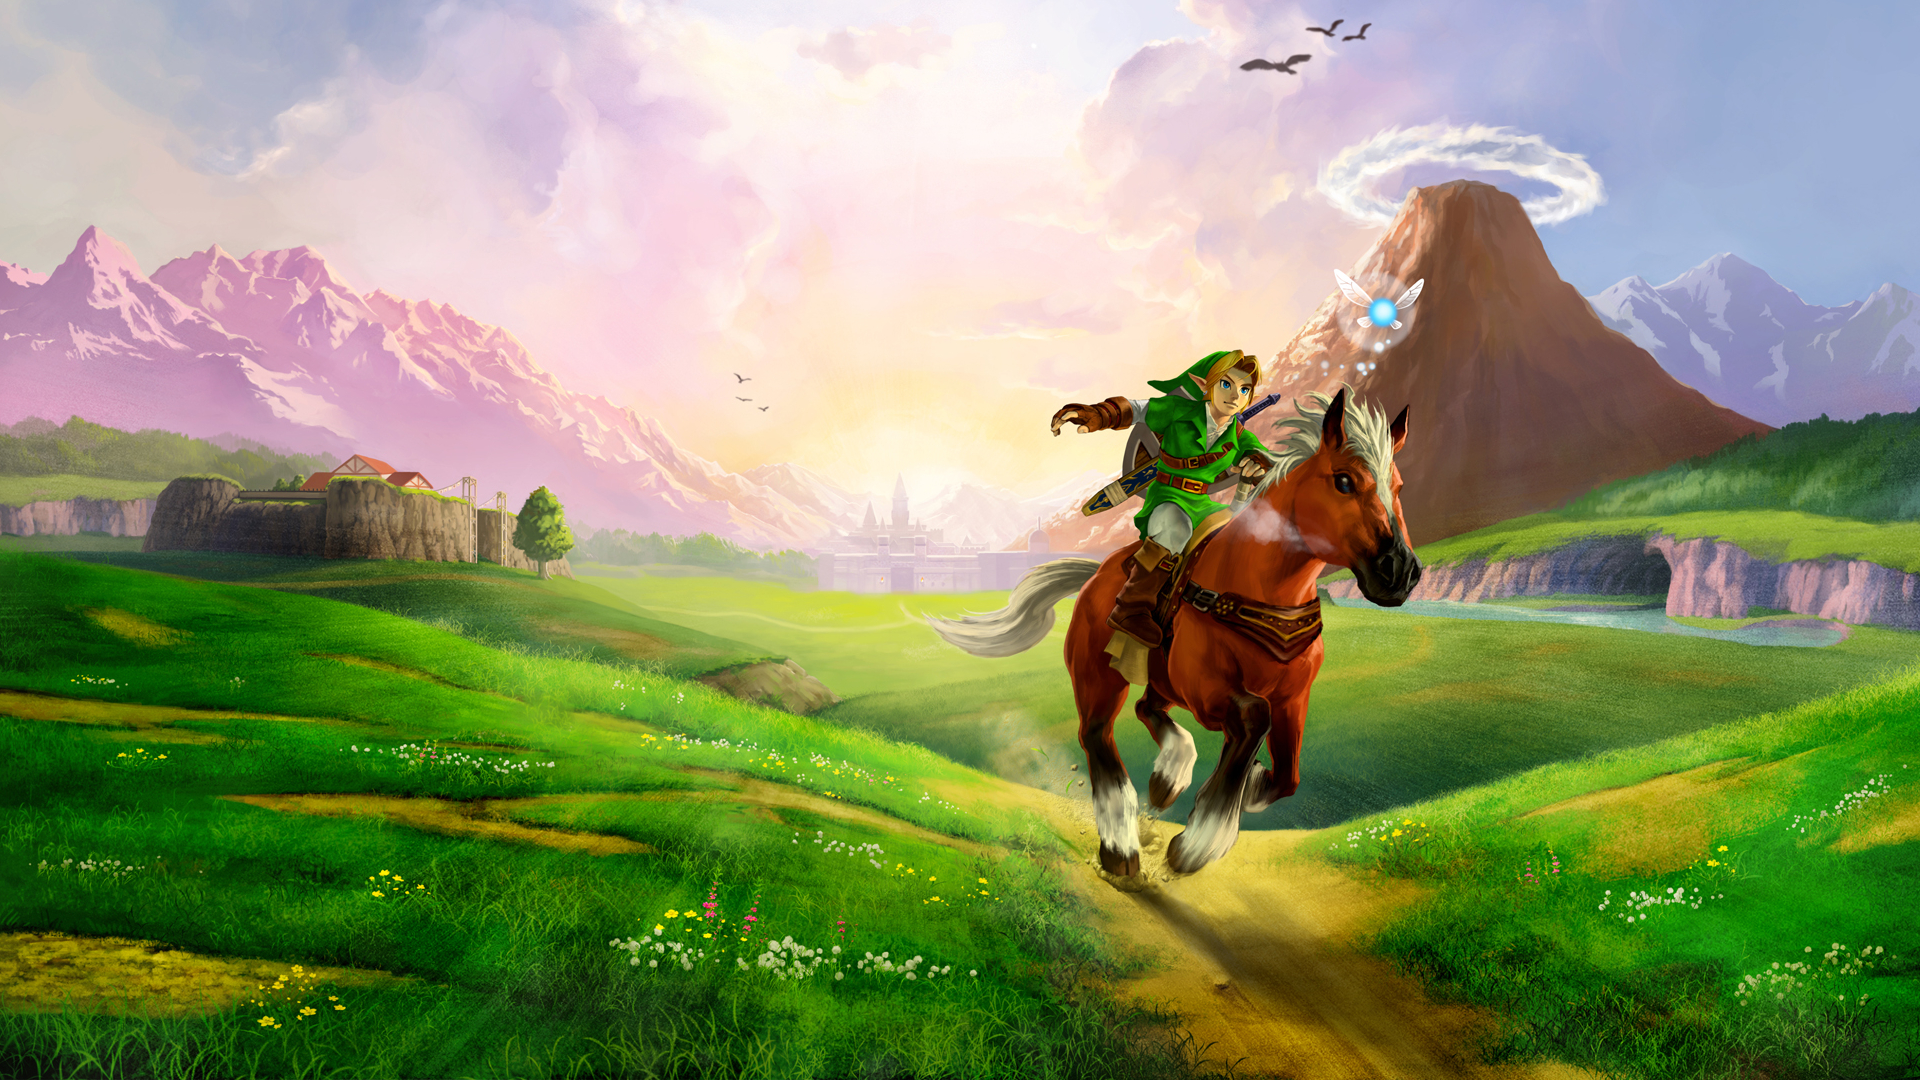 Best 3DS games - The Legend of Zelda: Ocarina of Time 3D